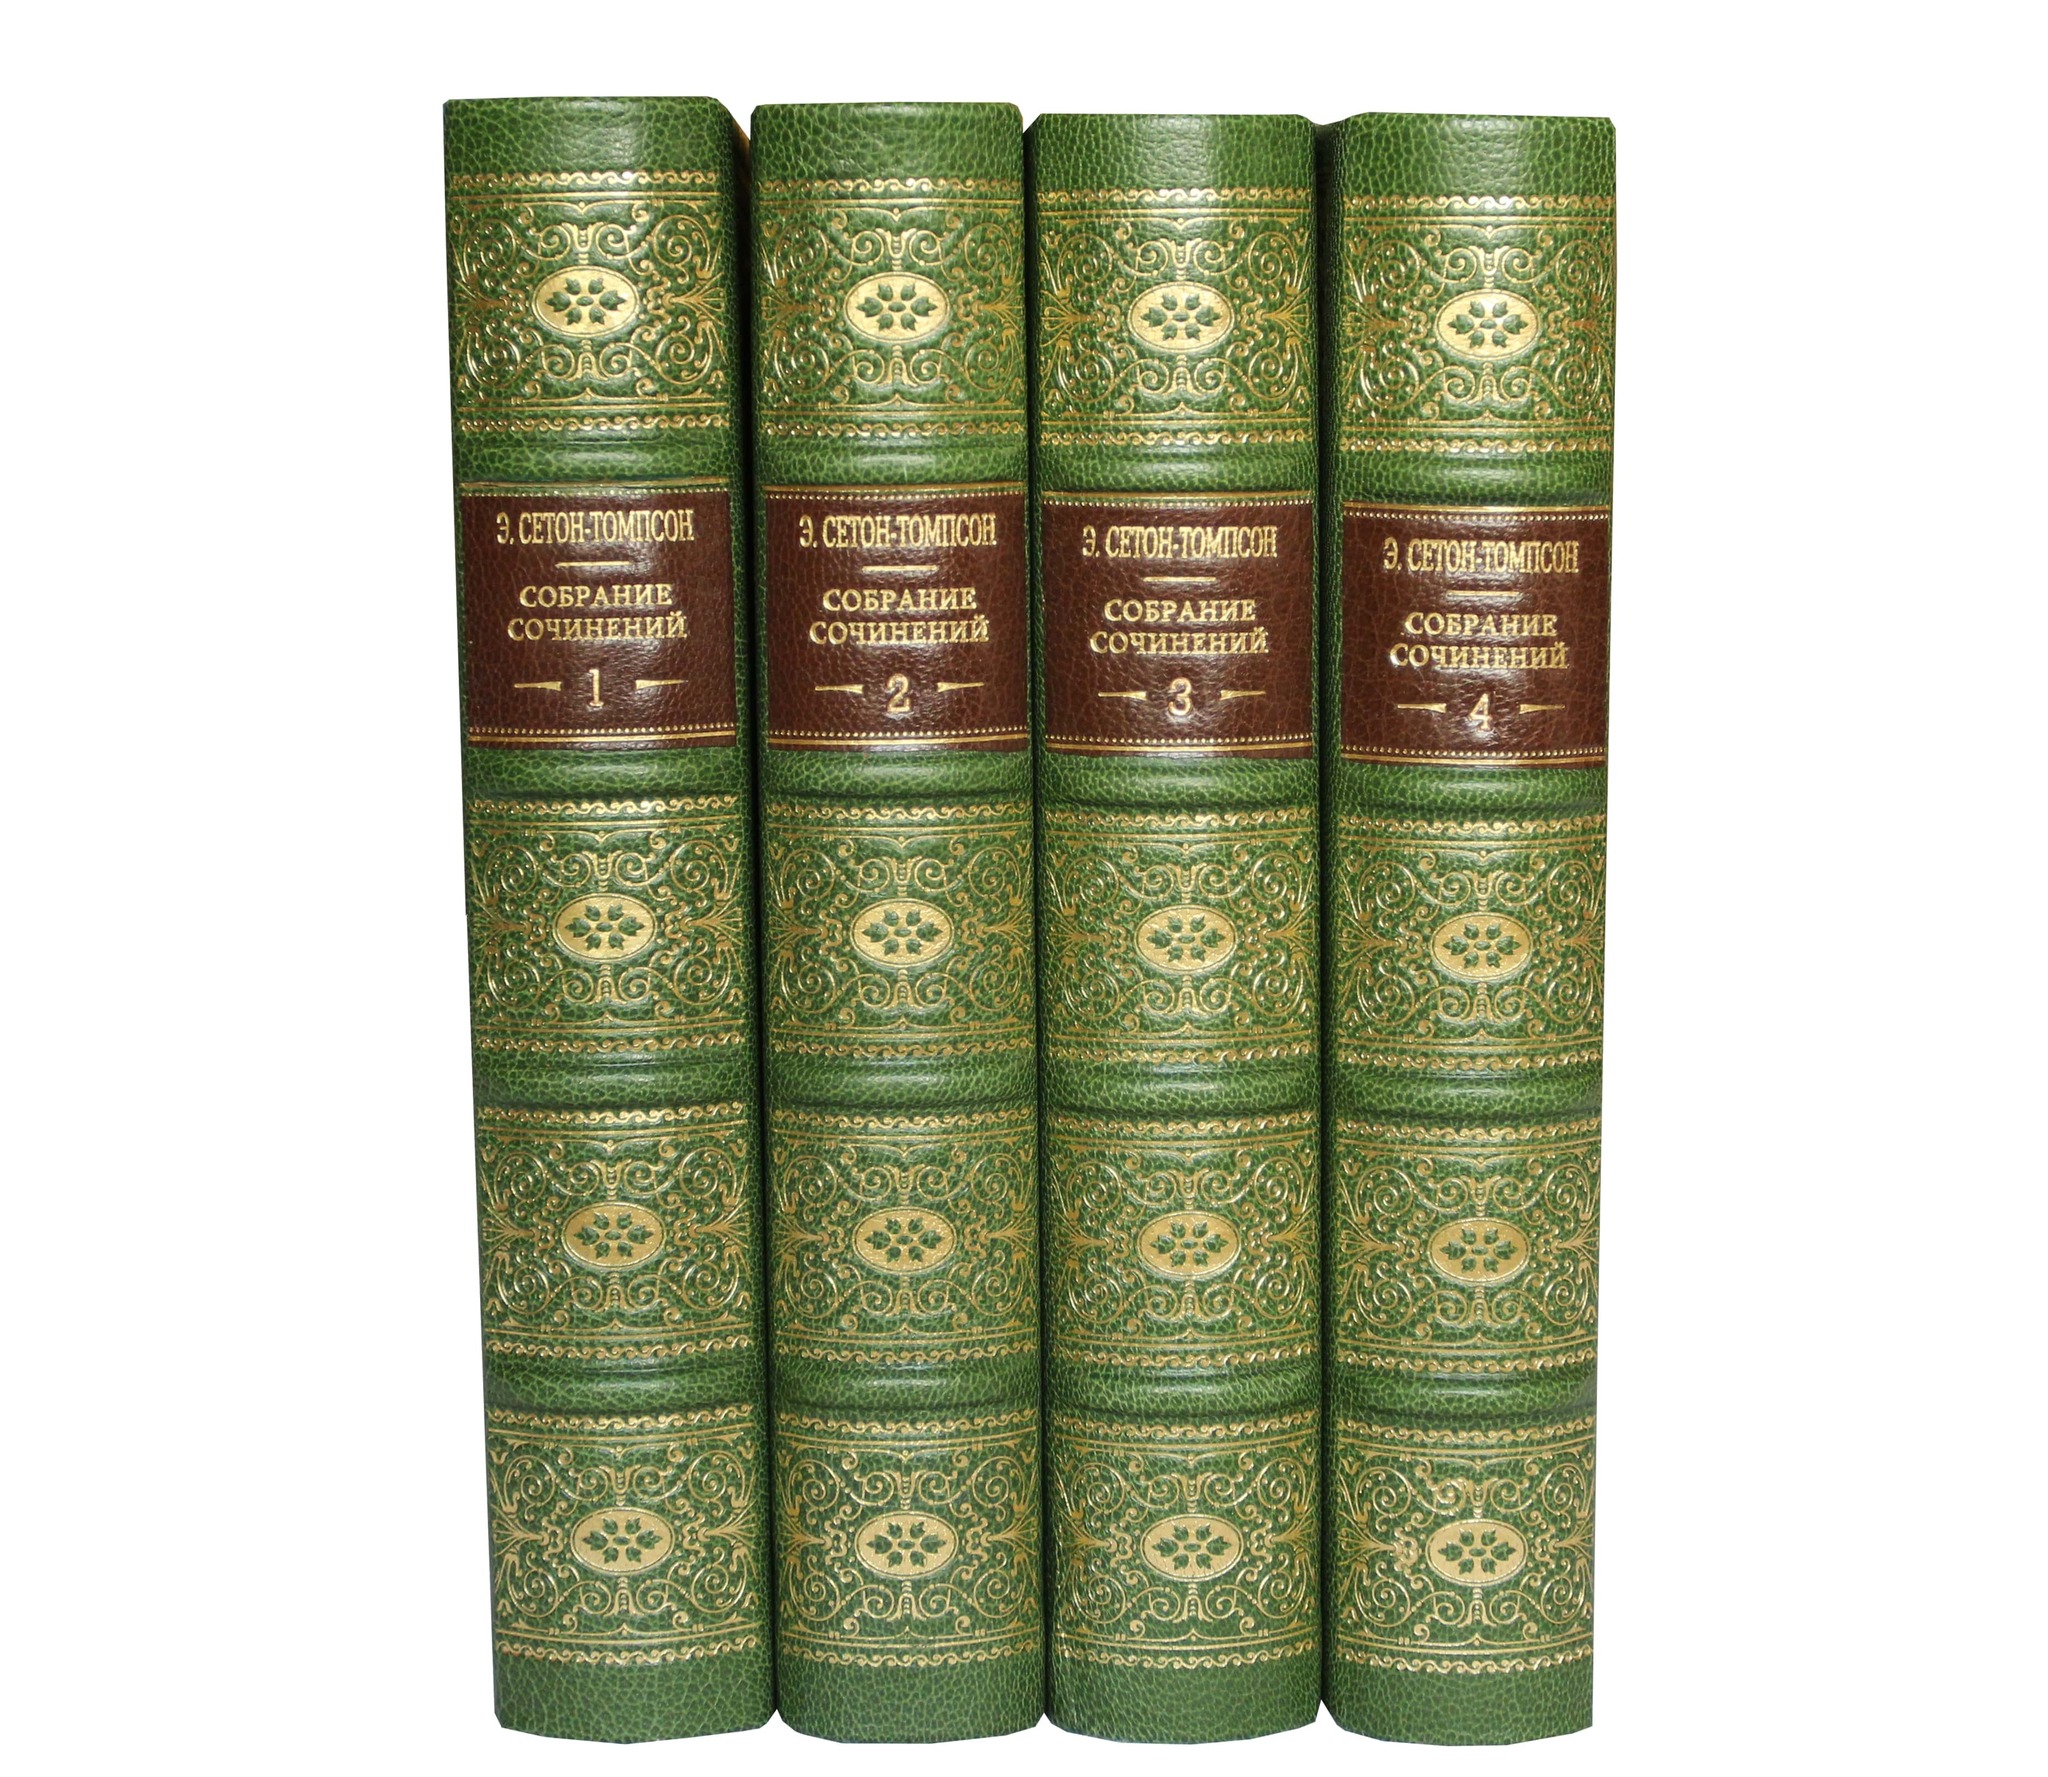 Сетон-Томпсон Э. Собрание сочинений в 4 томах